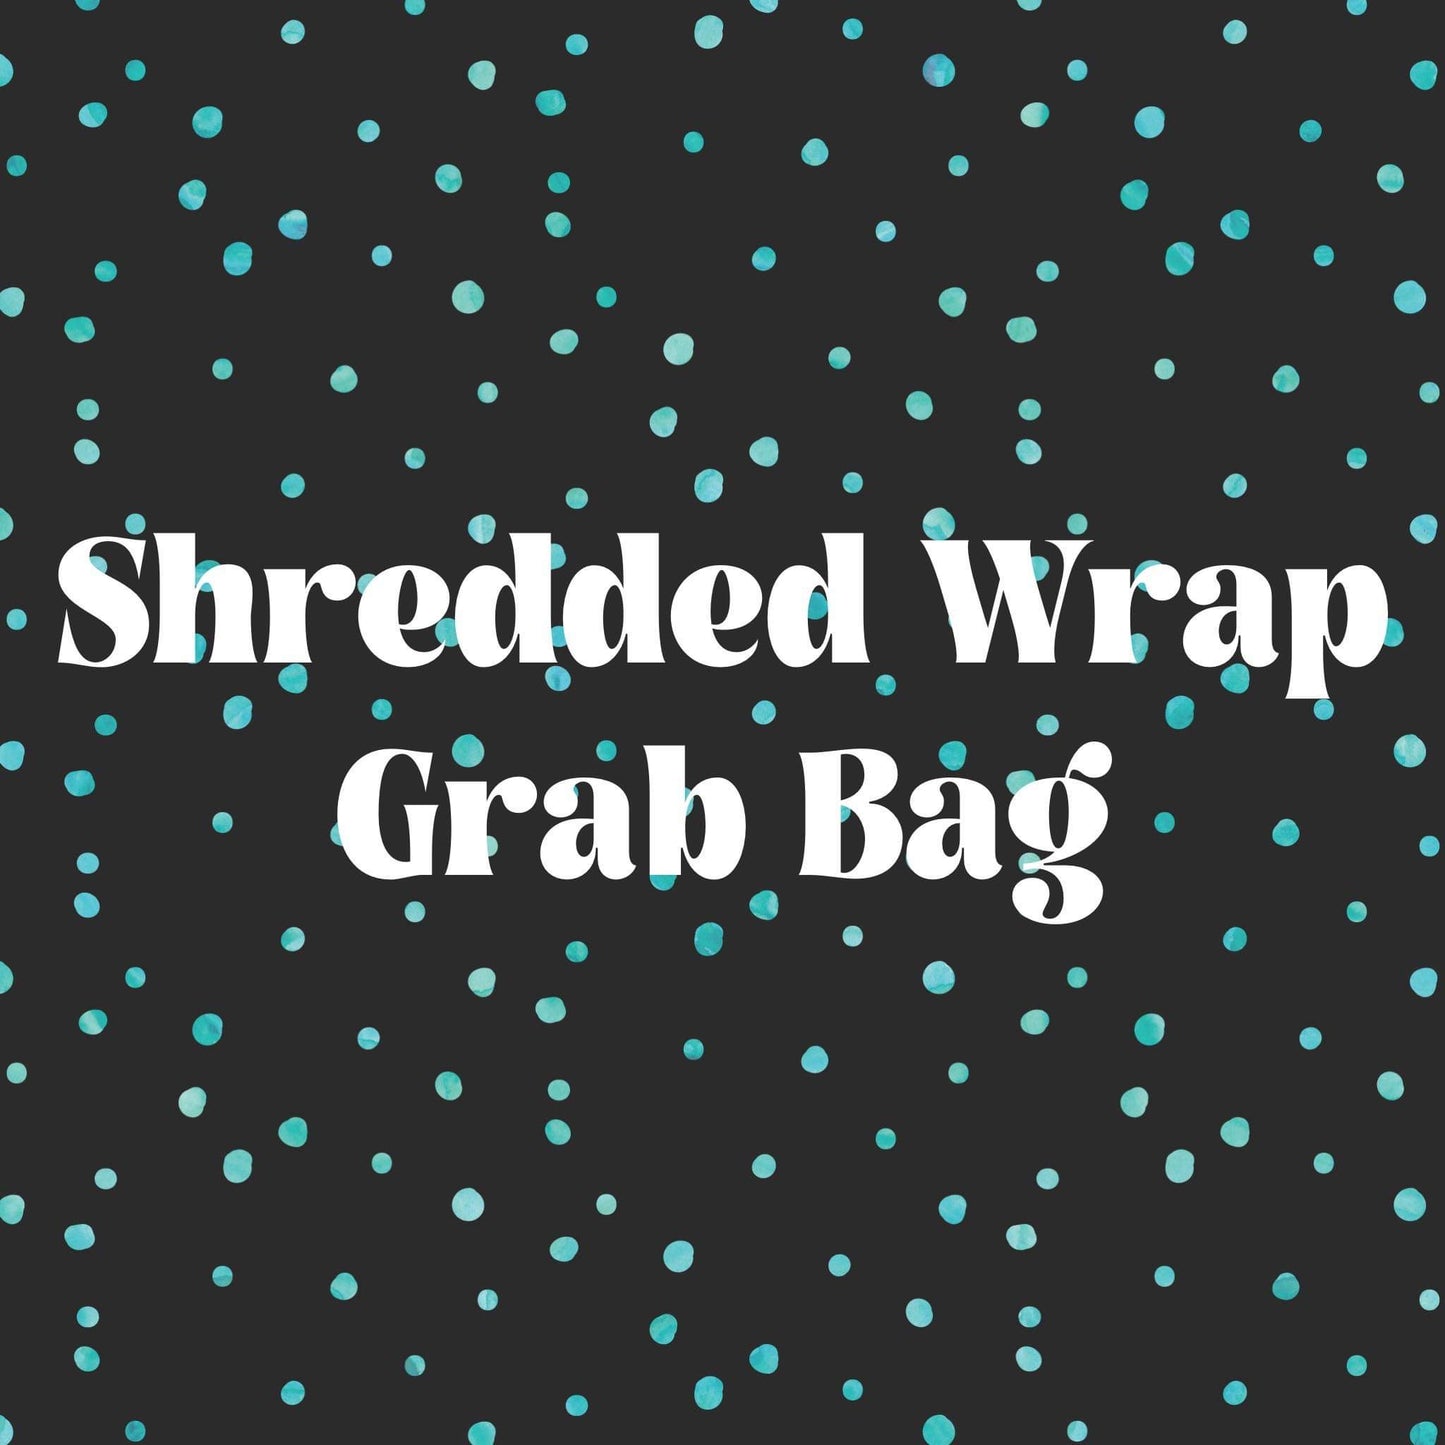 Shredded wrap grab bag